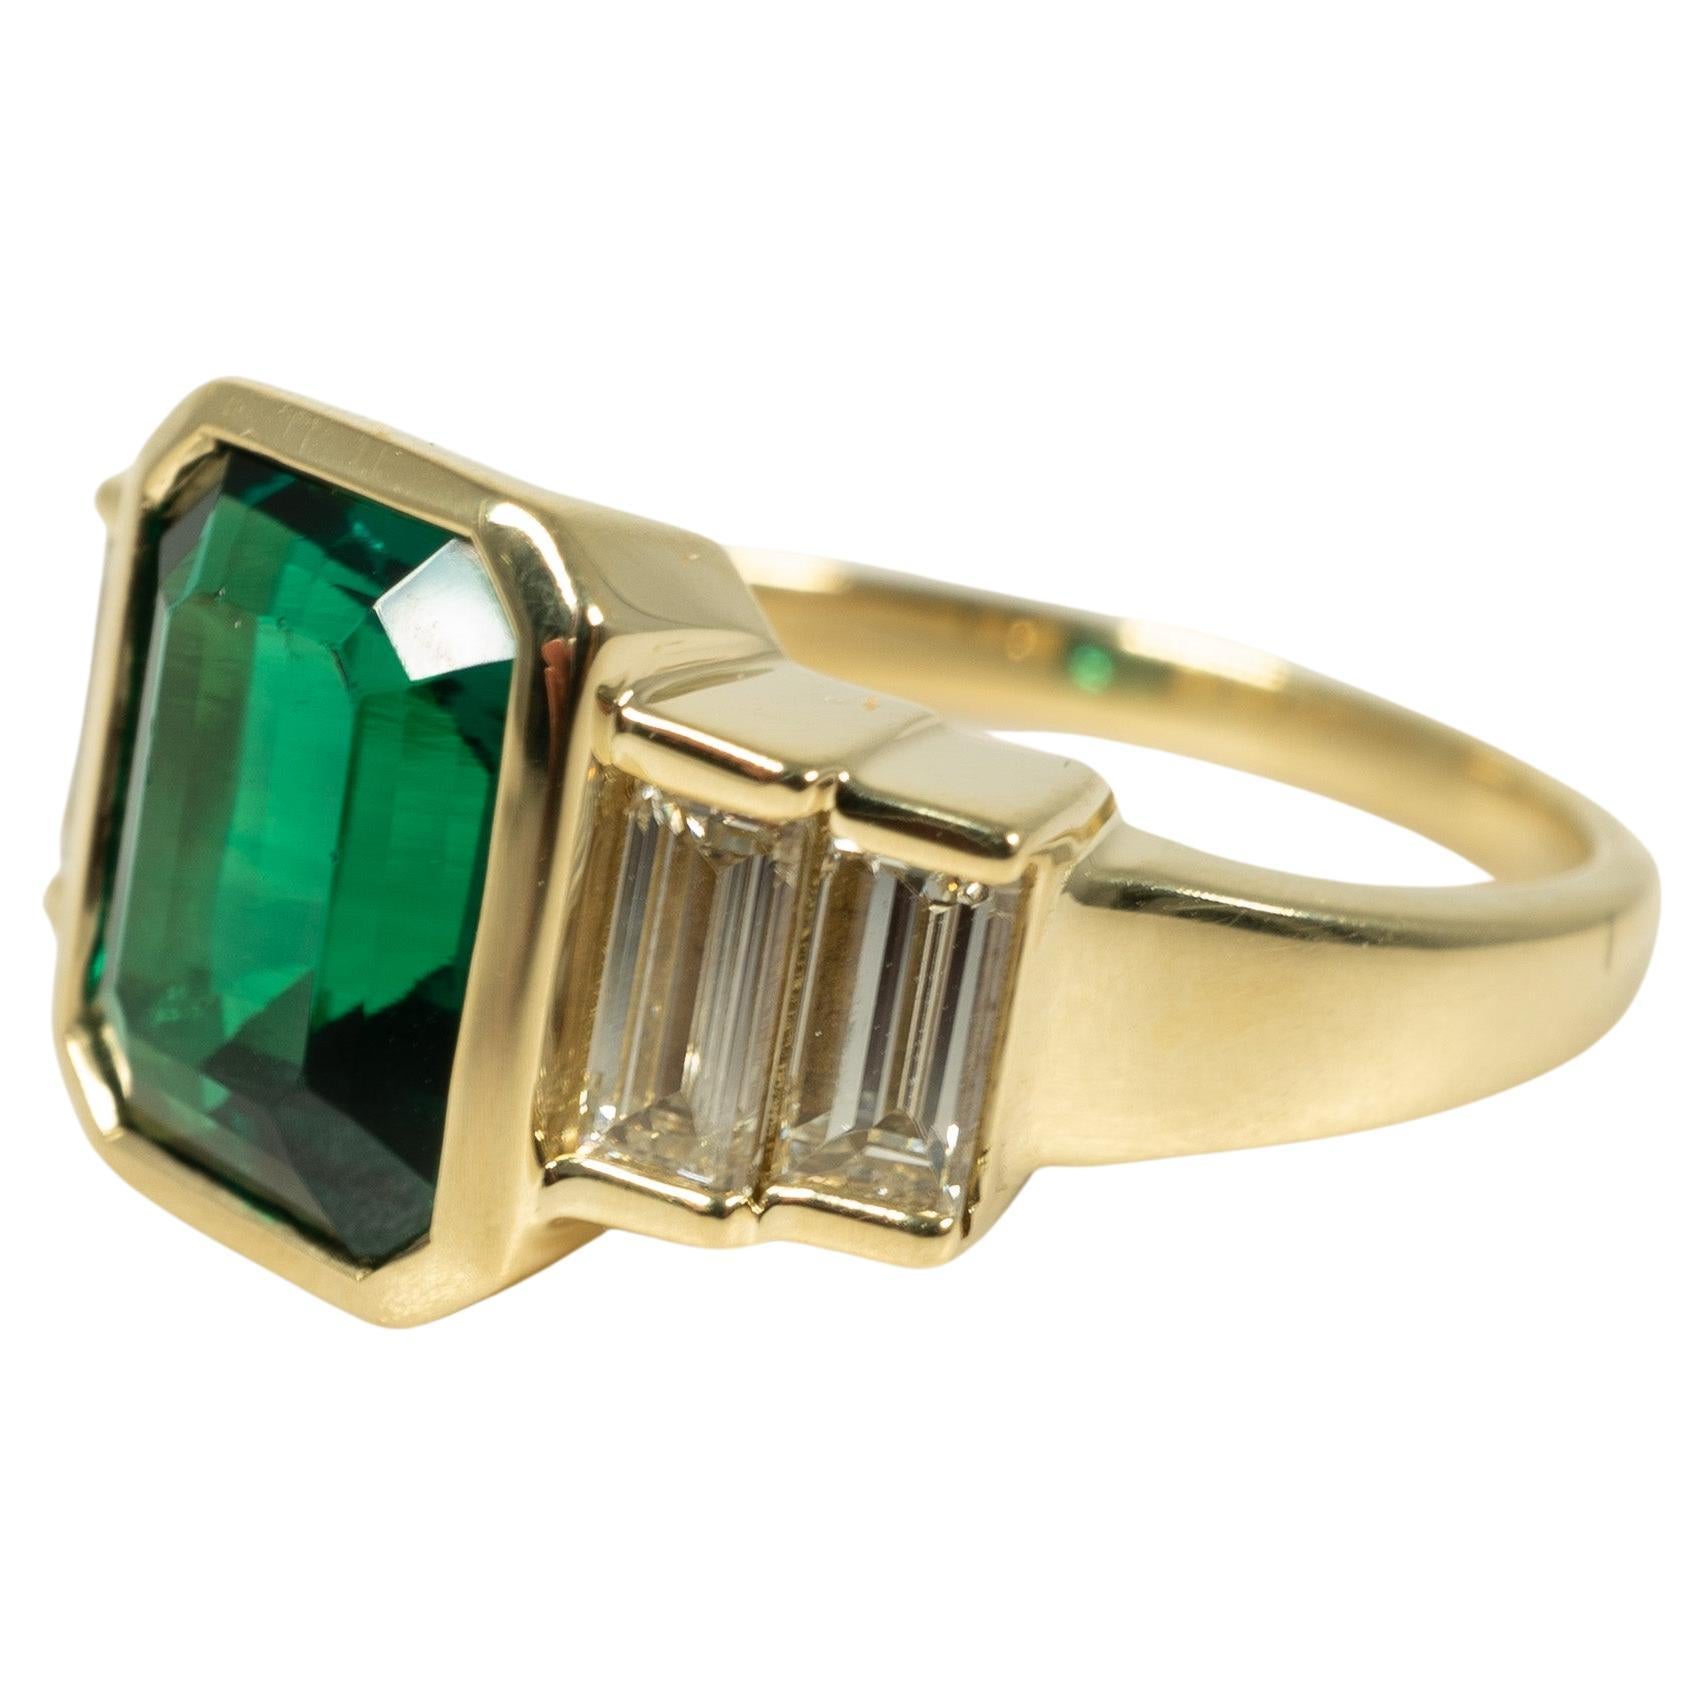 18 Karat Yellow Gold, Green Stone Diamond Ring